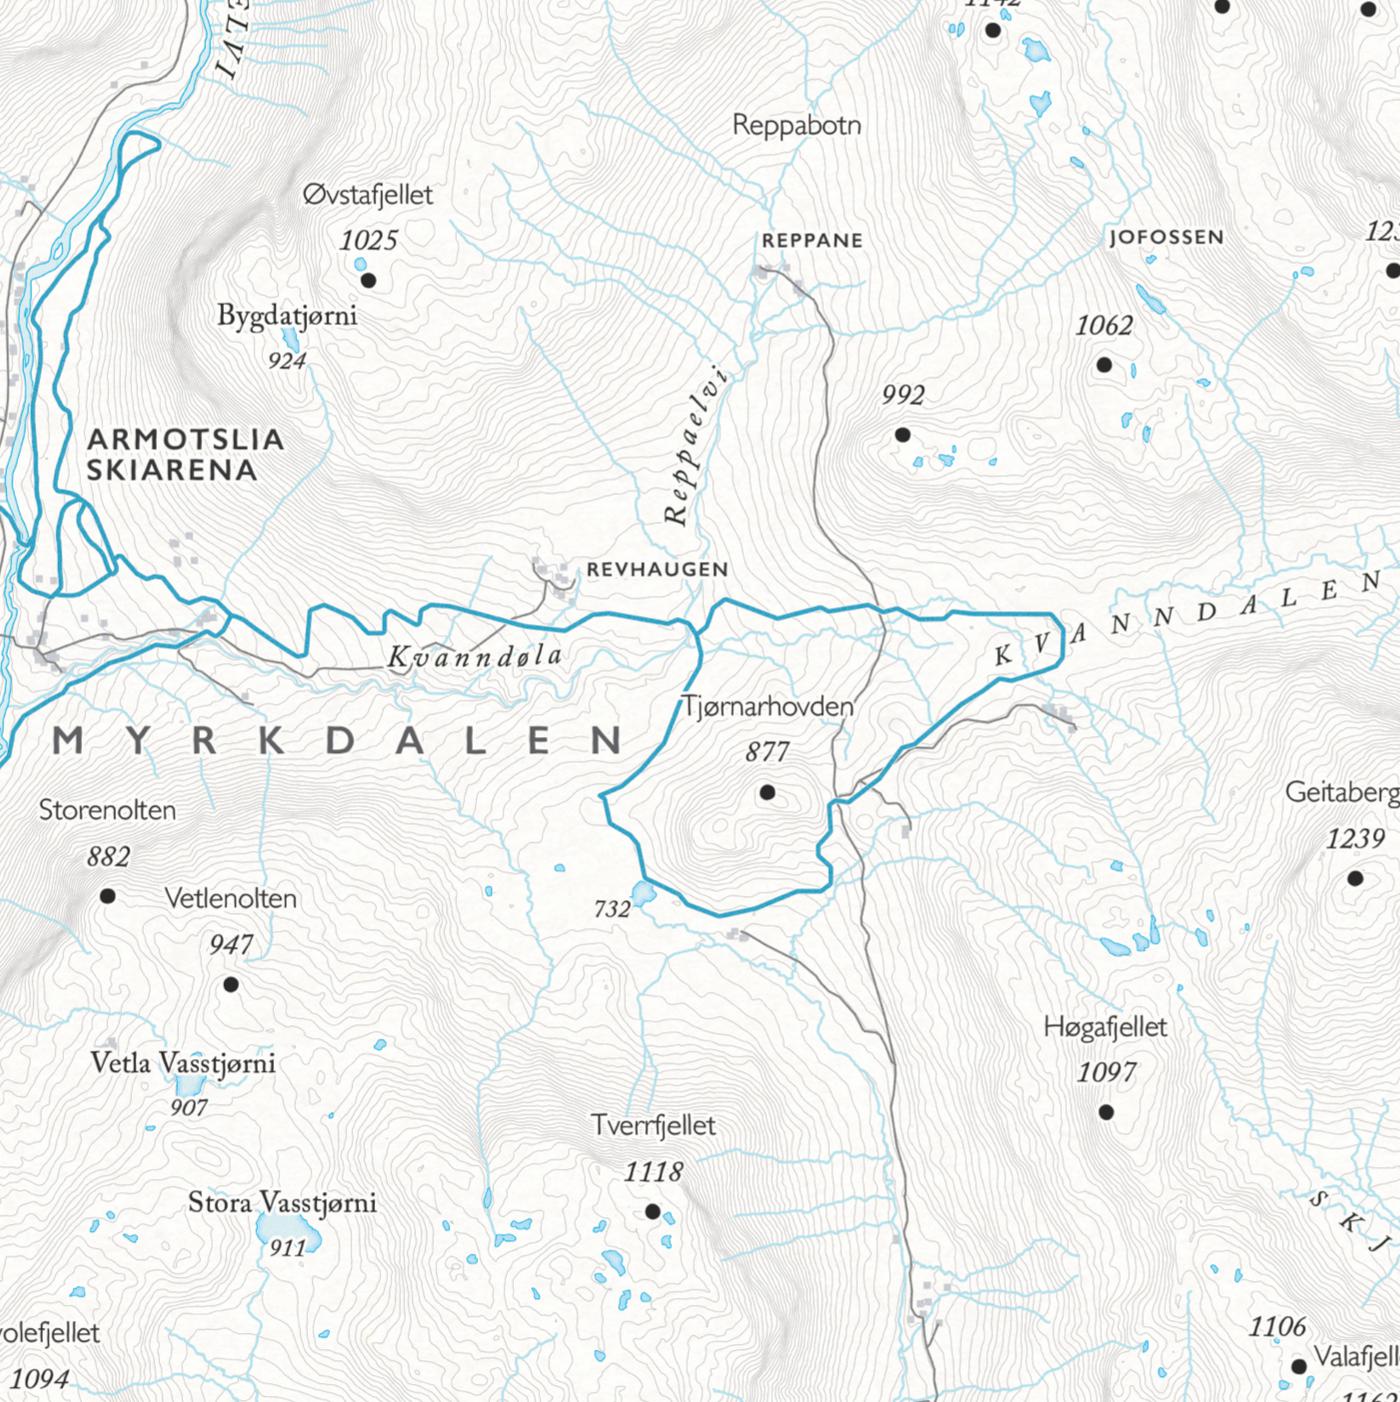 Skikart Myrkdalen (50x70 cm)-Maps-Dapamaps-Hyttefeber